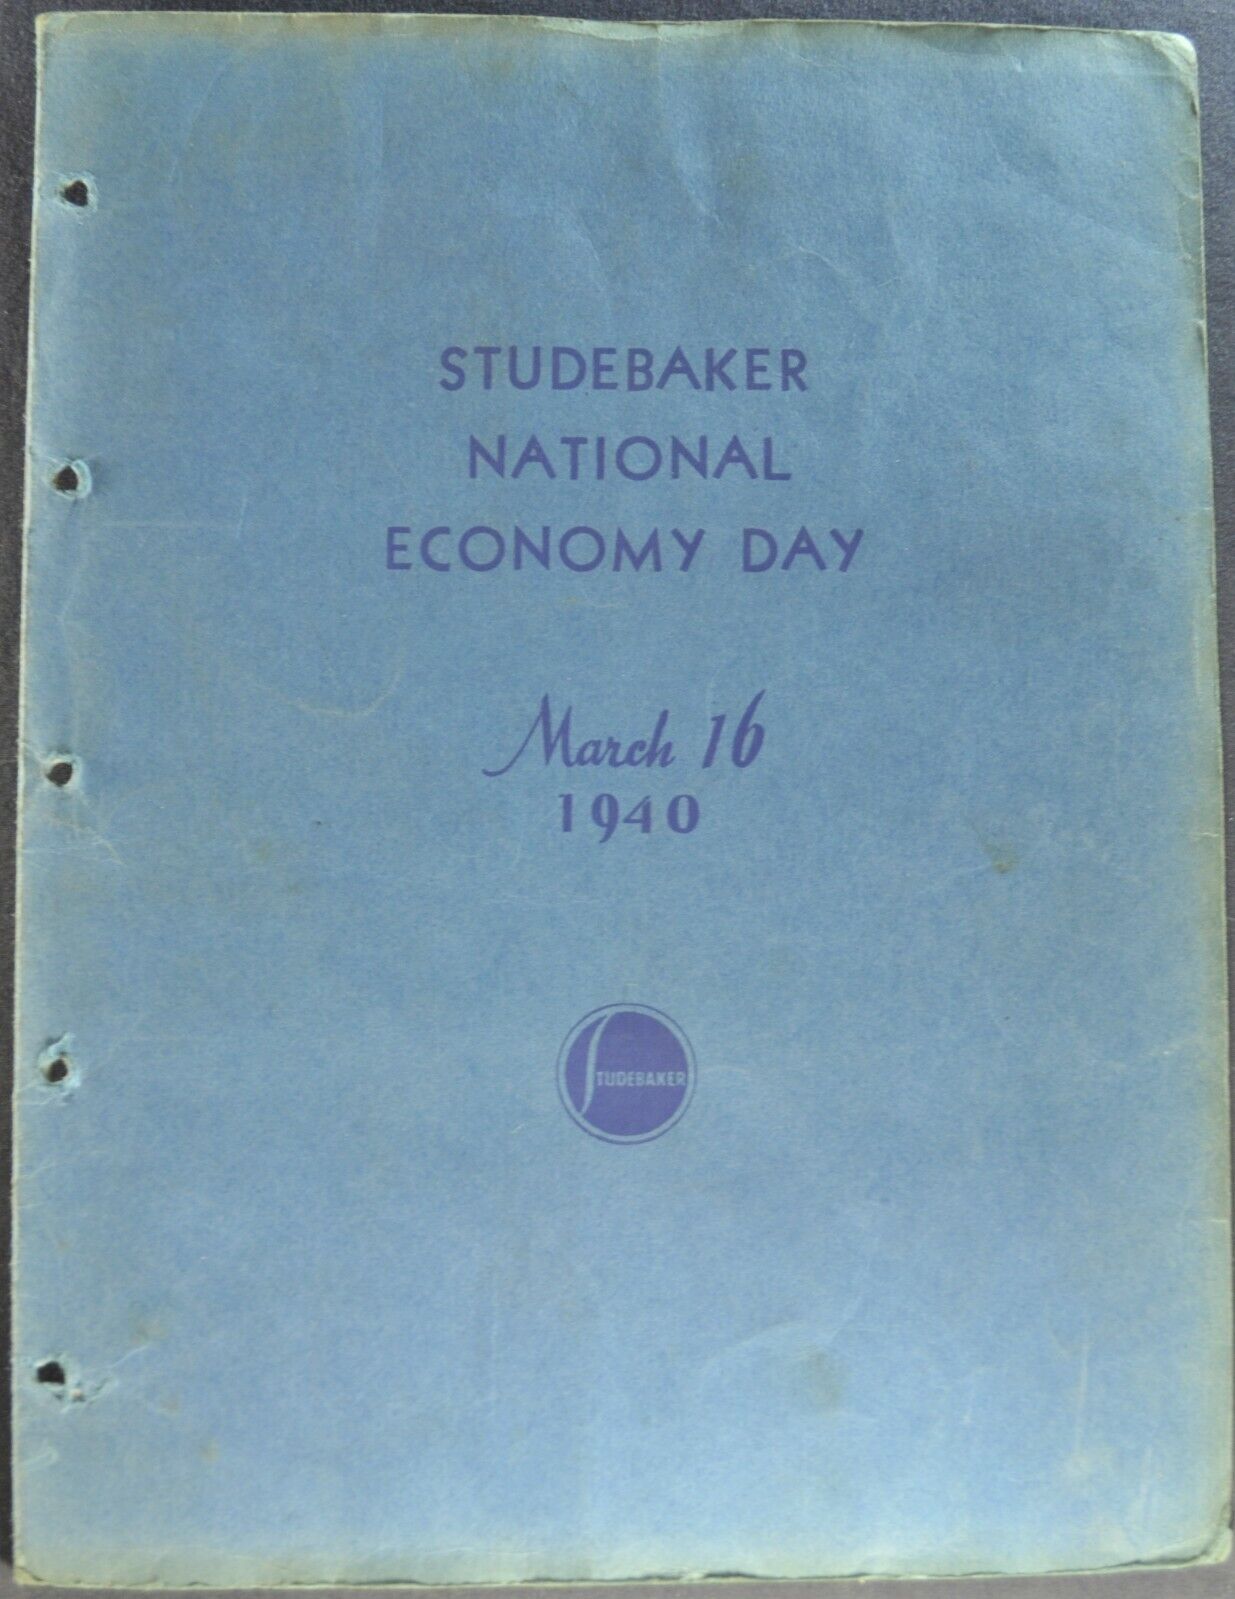 1940 Studebaker Economy Day Run Notarized Certification Champion Nice Original